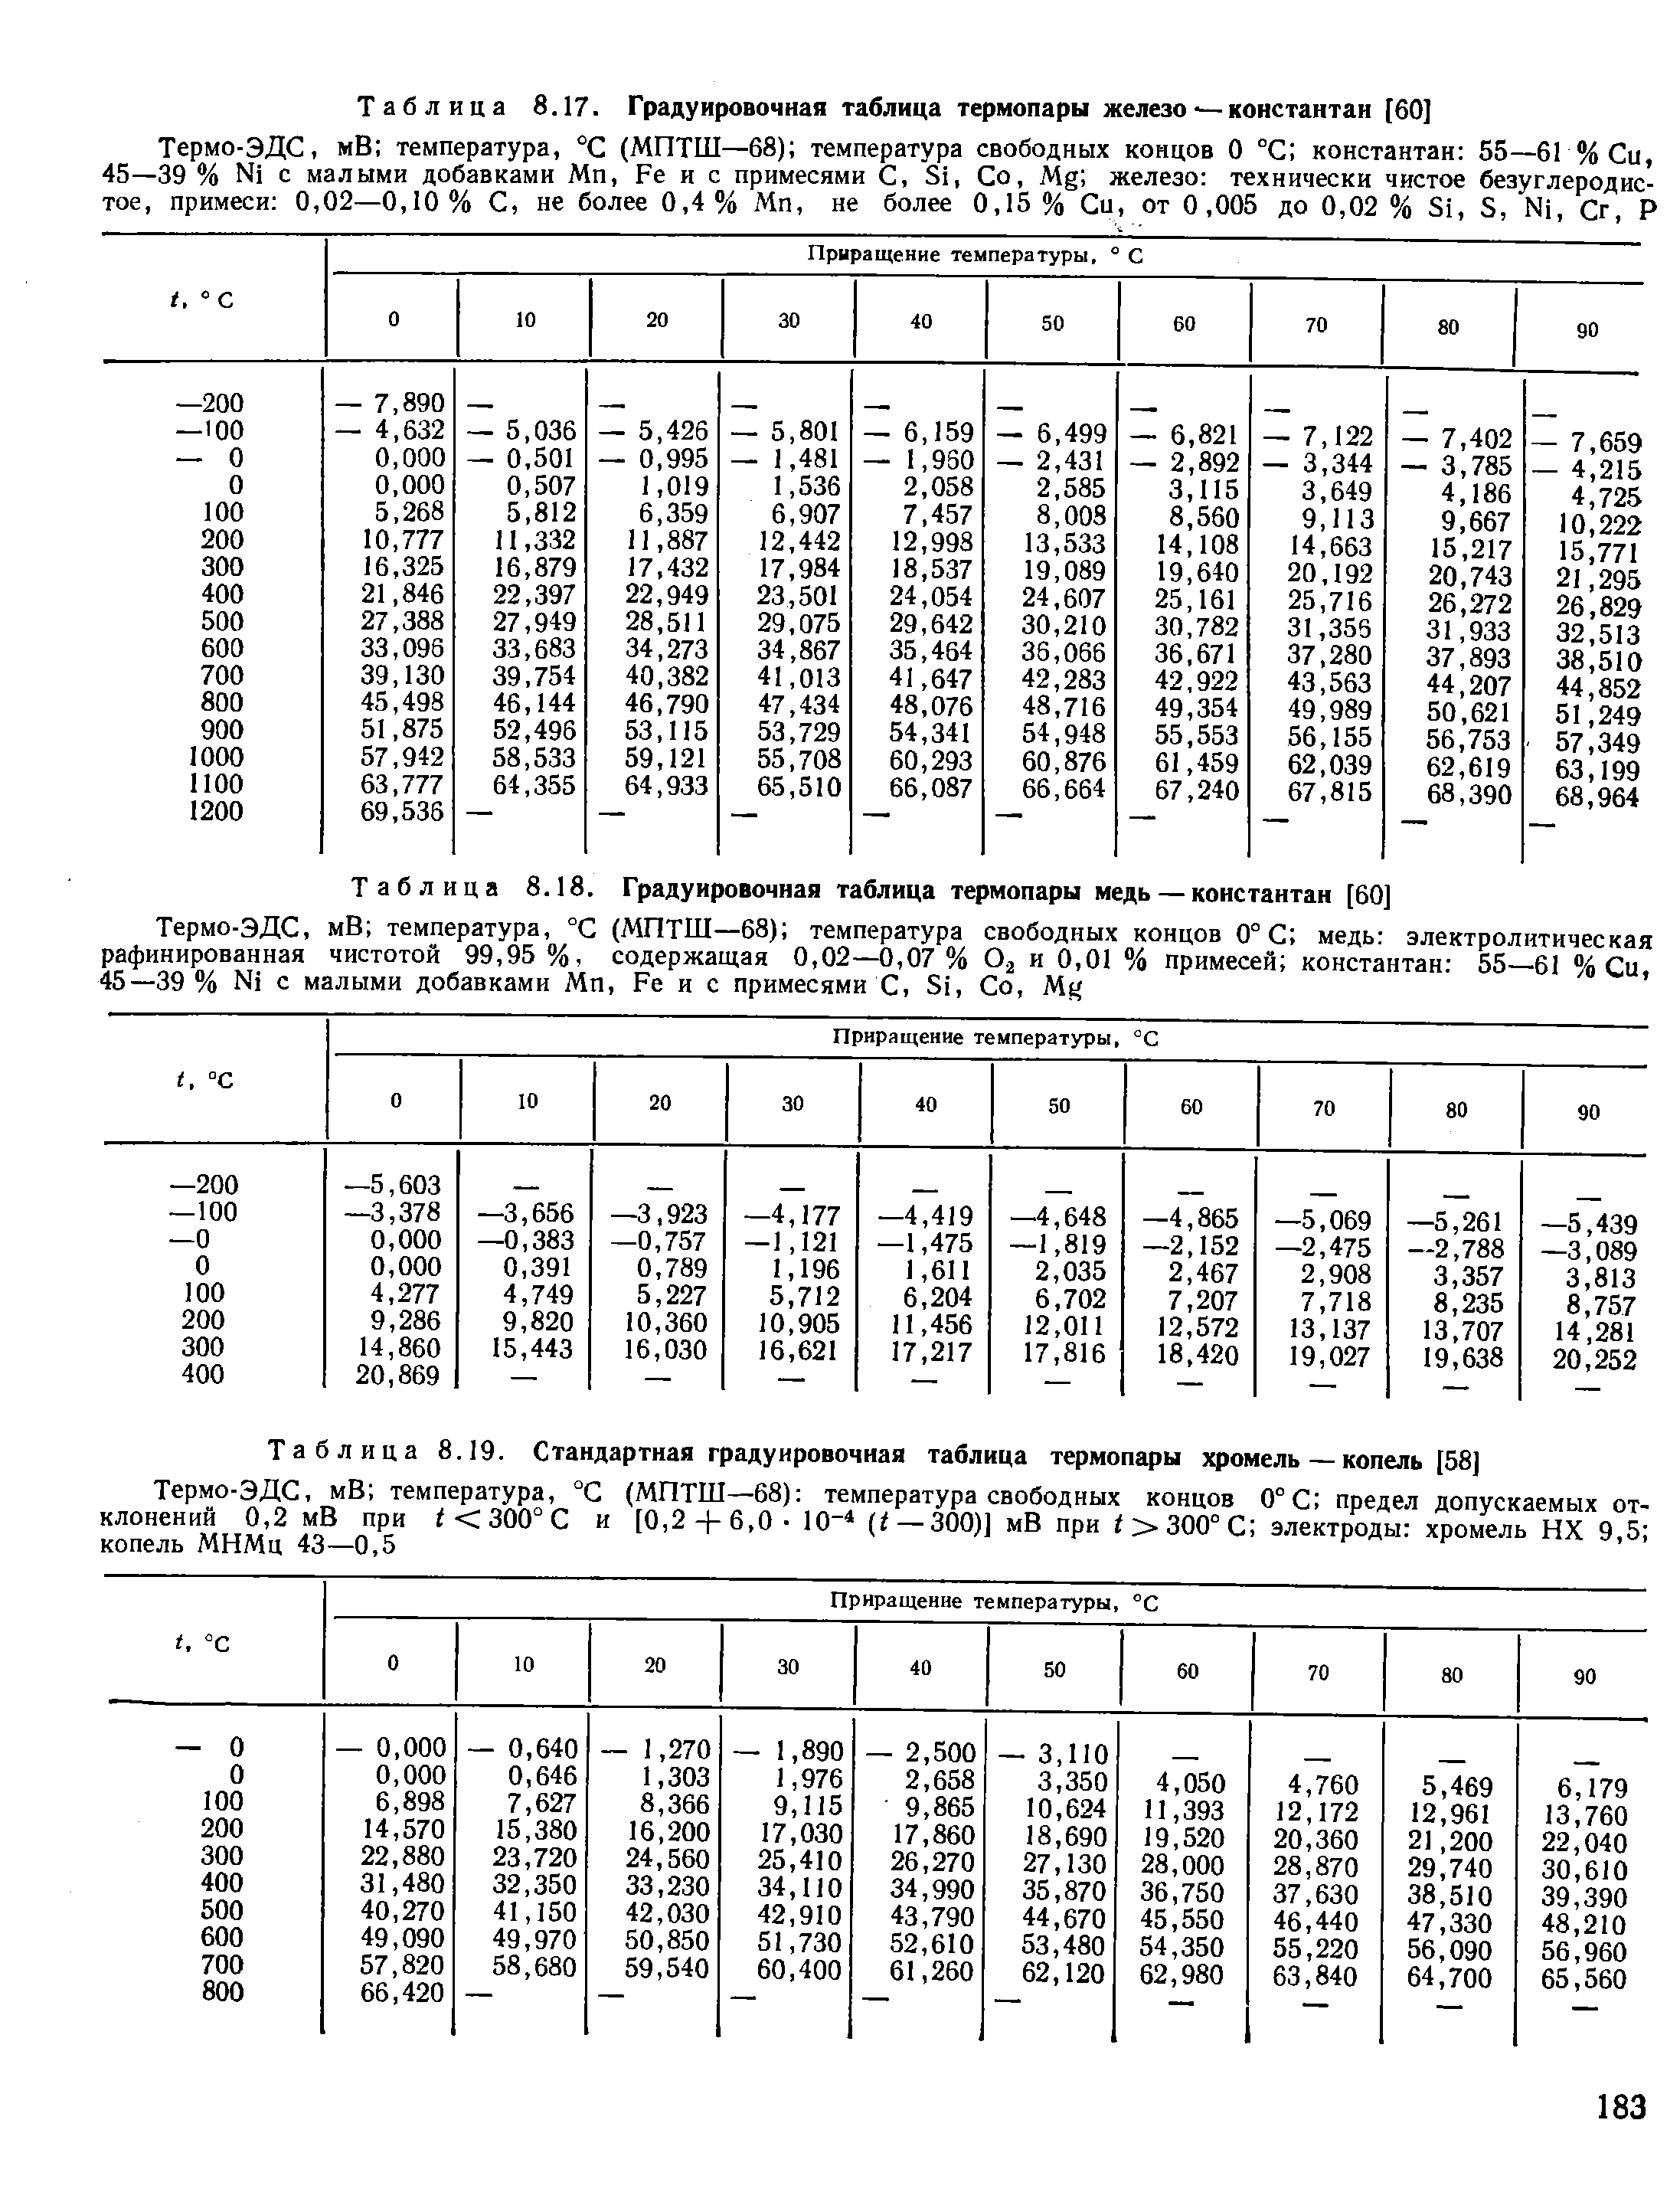 Таблица 8.19. Стандартная градуировочная таблица термопары хромель — копель [58]
